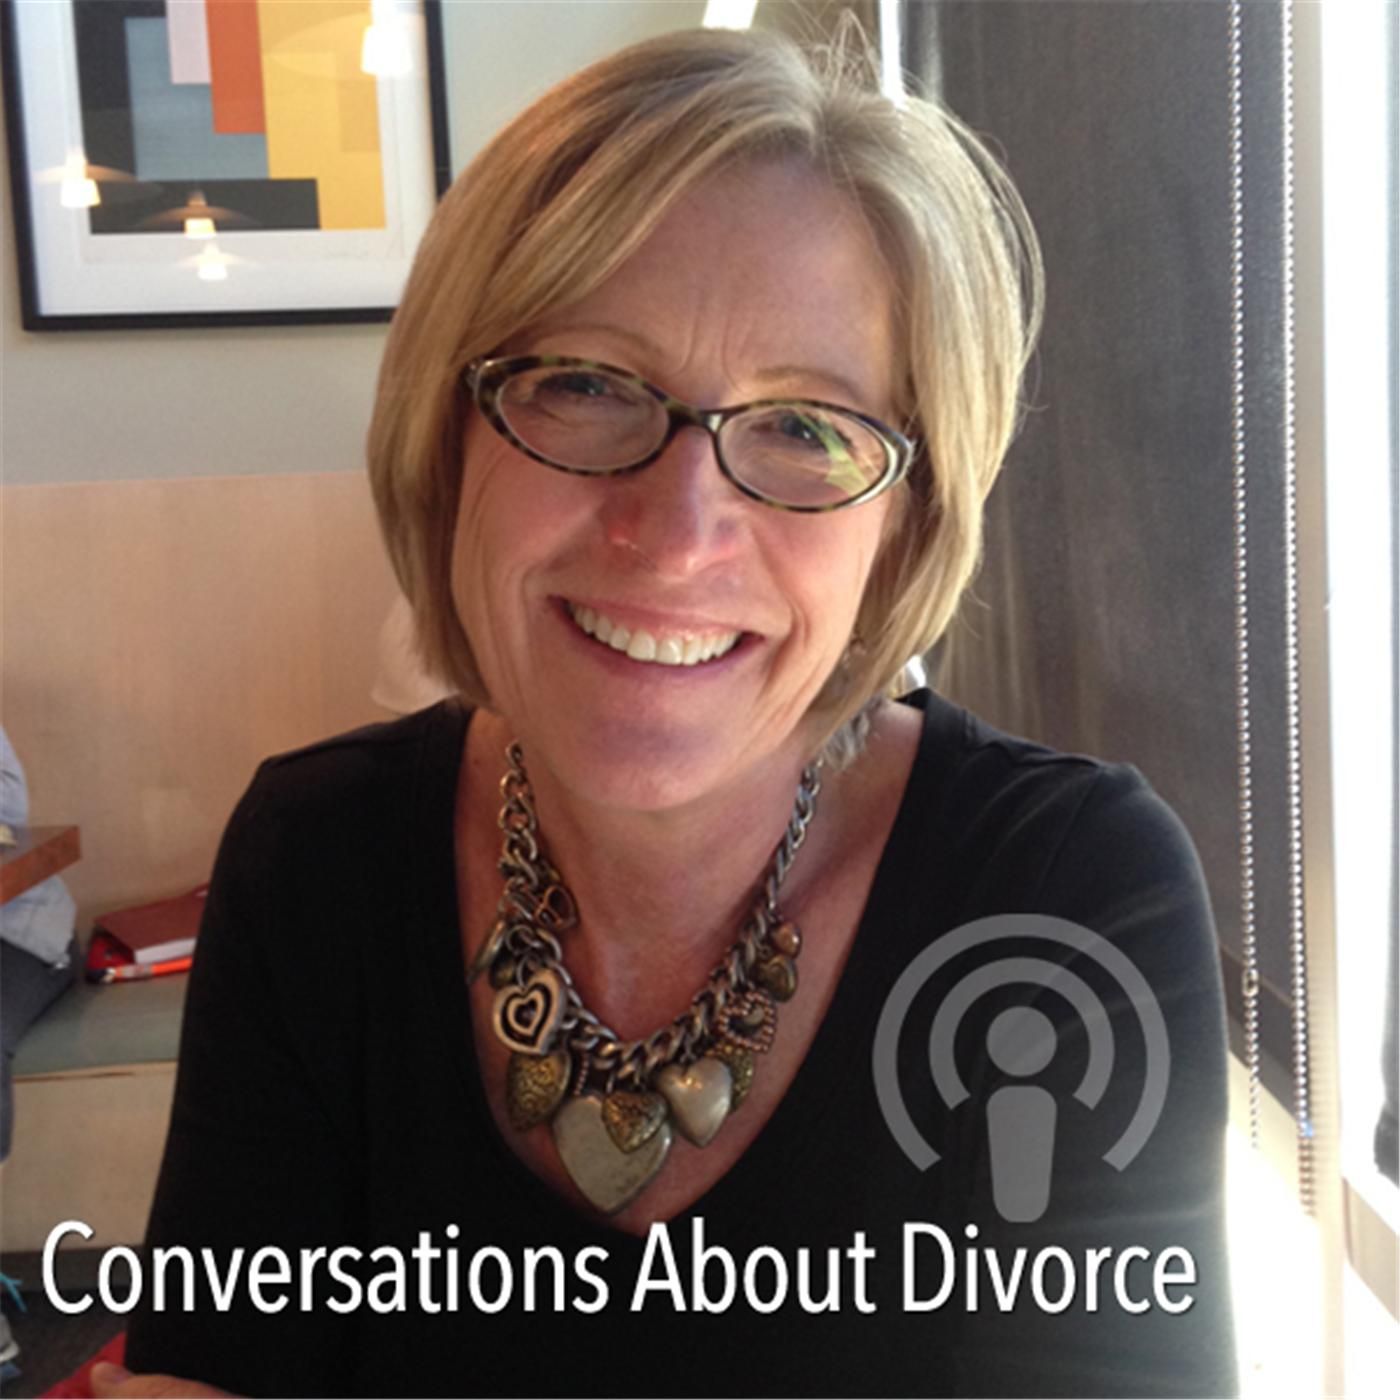 Conversations About Divorce - Understanding Divorce With Adult Children